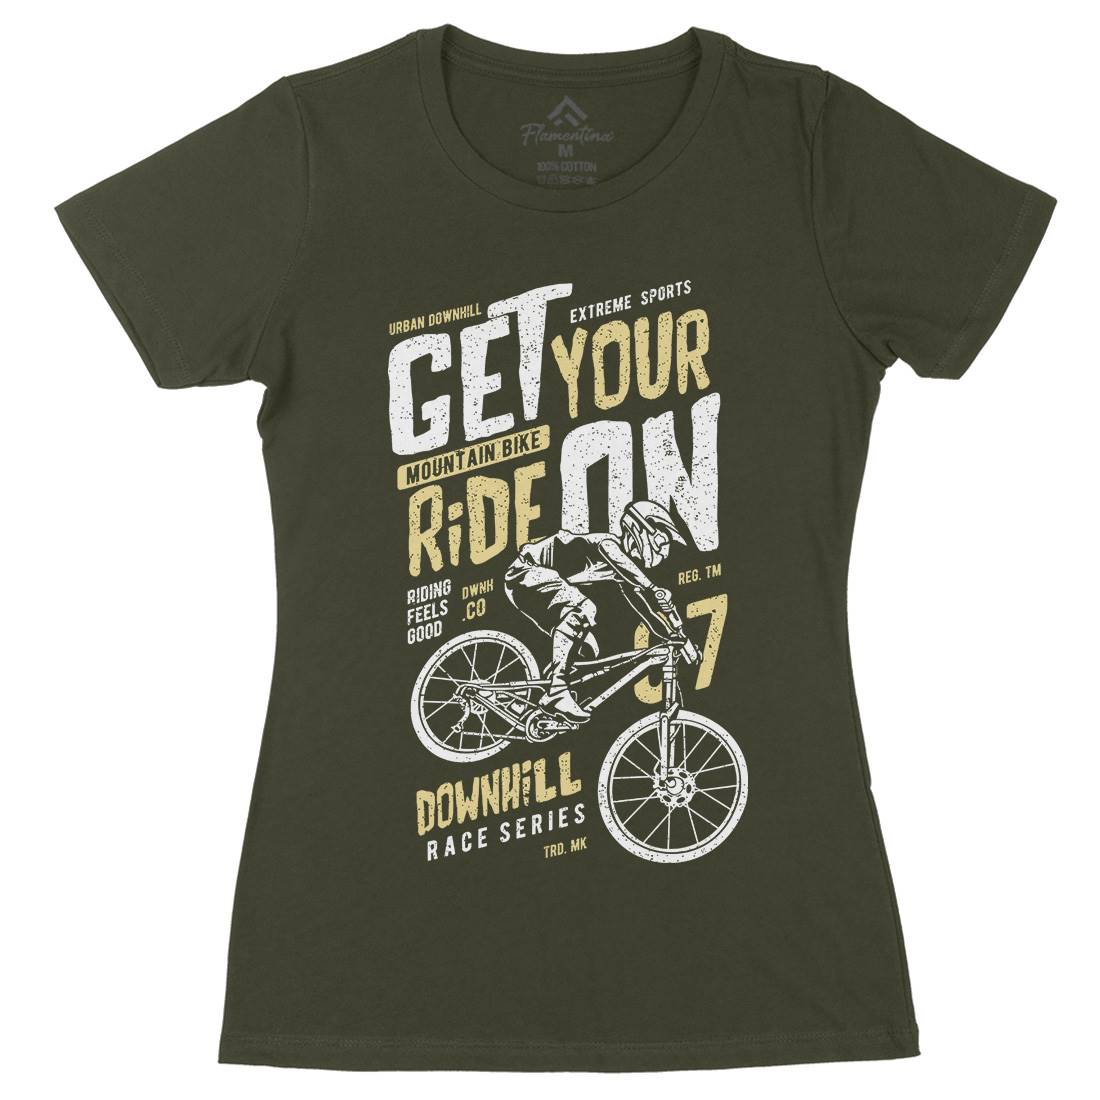 Get Your Ride Womens Organic Crew Neck T-Shirt Bikes A673